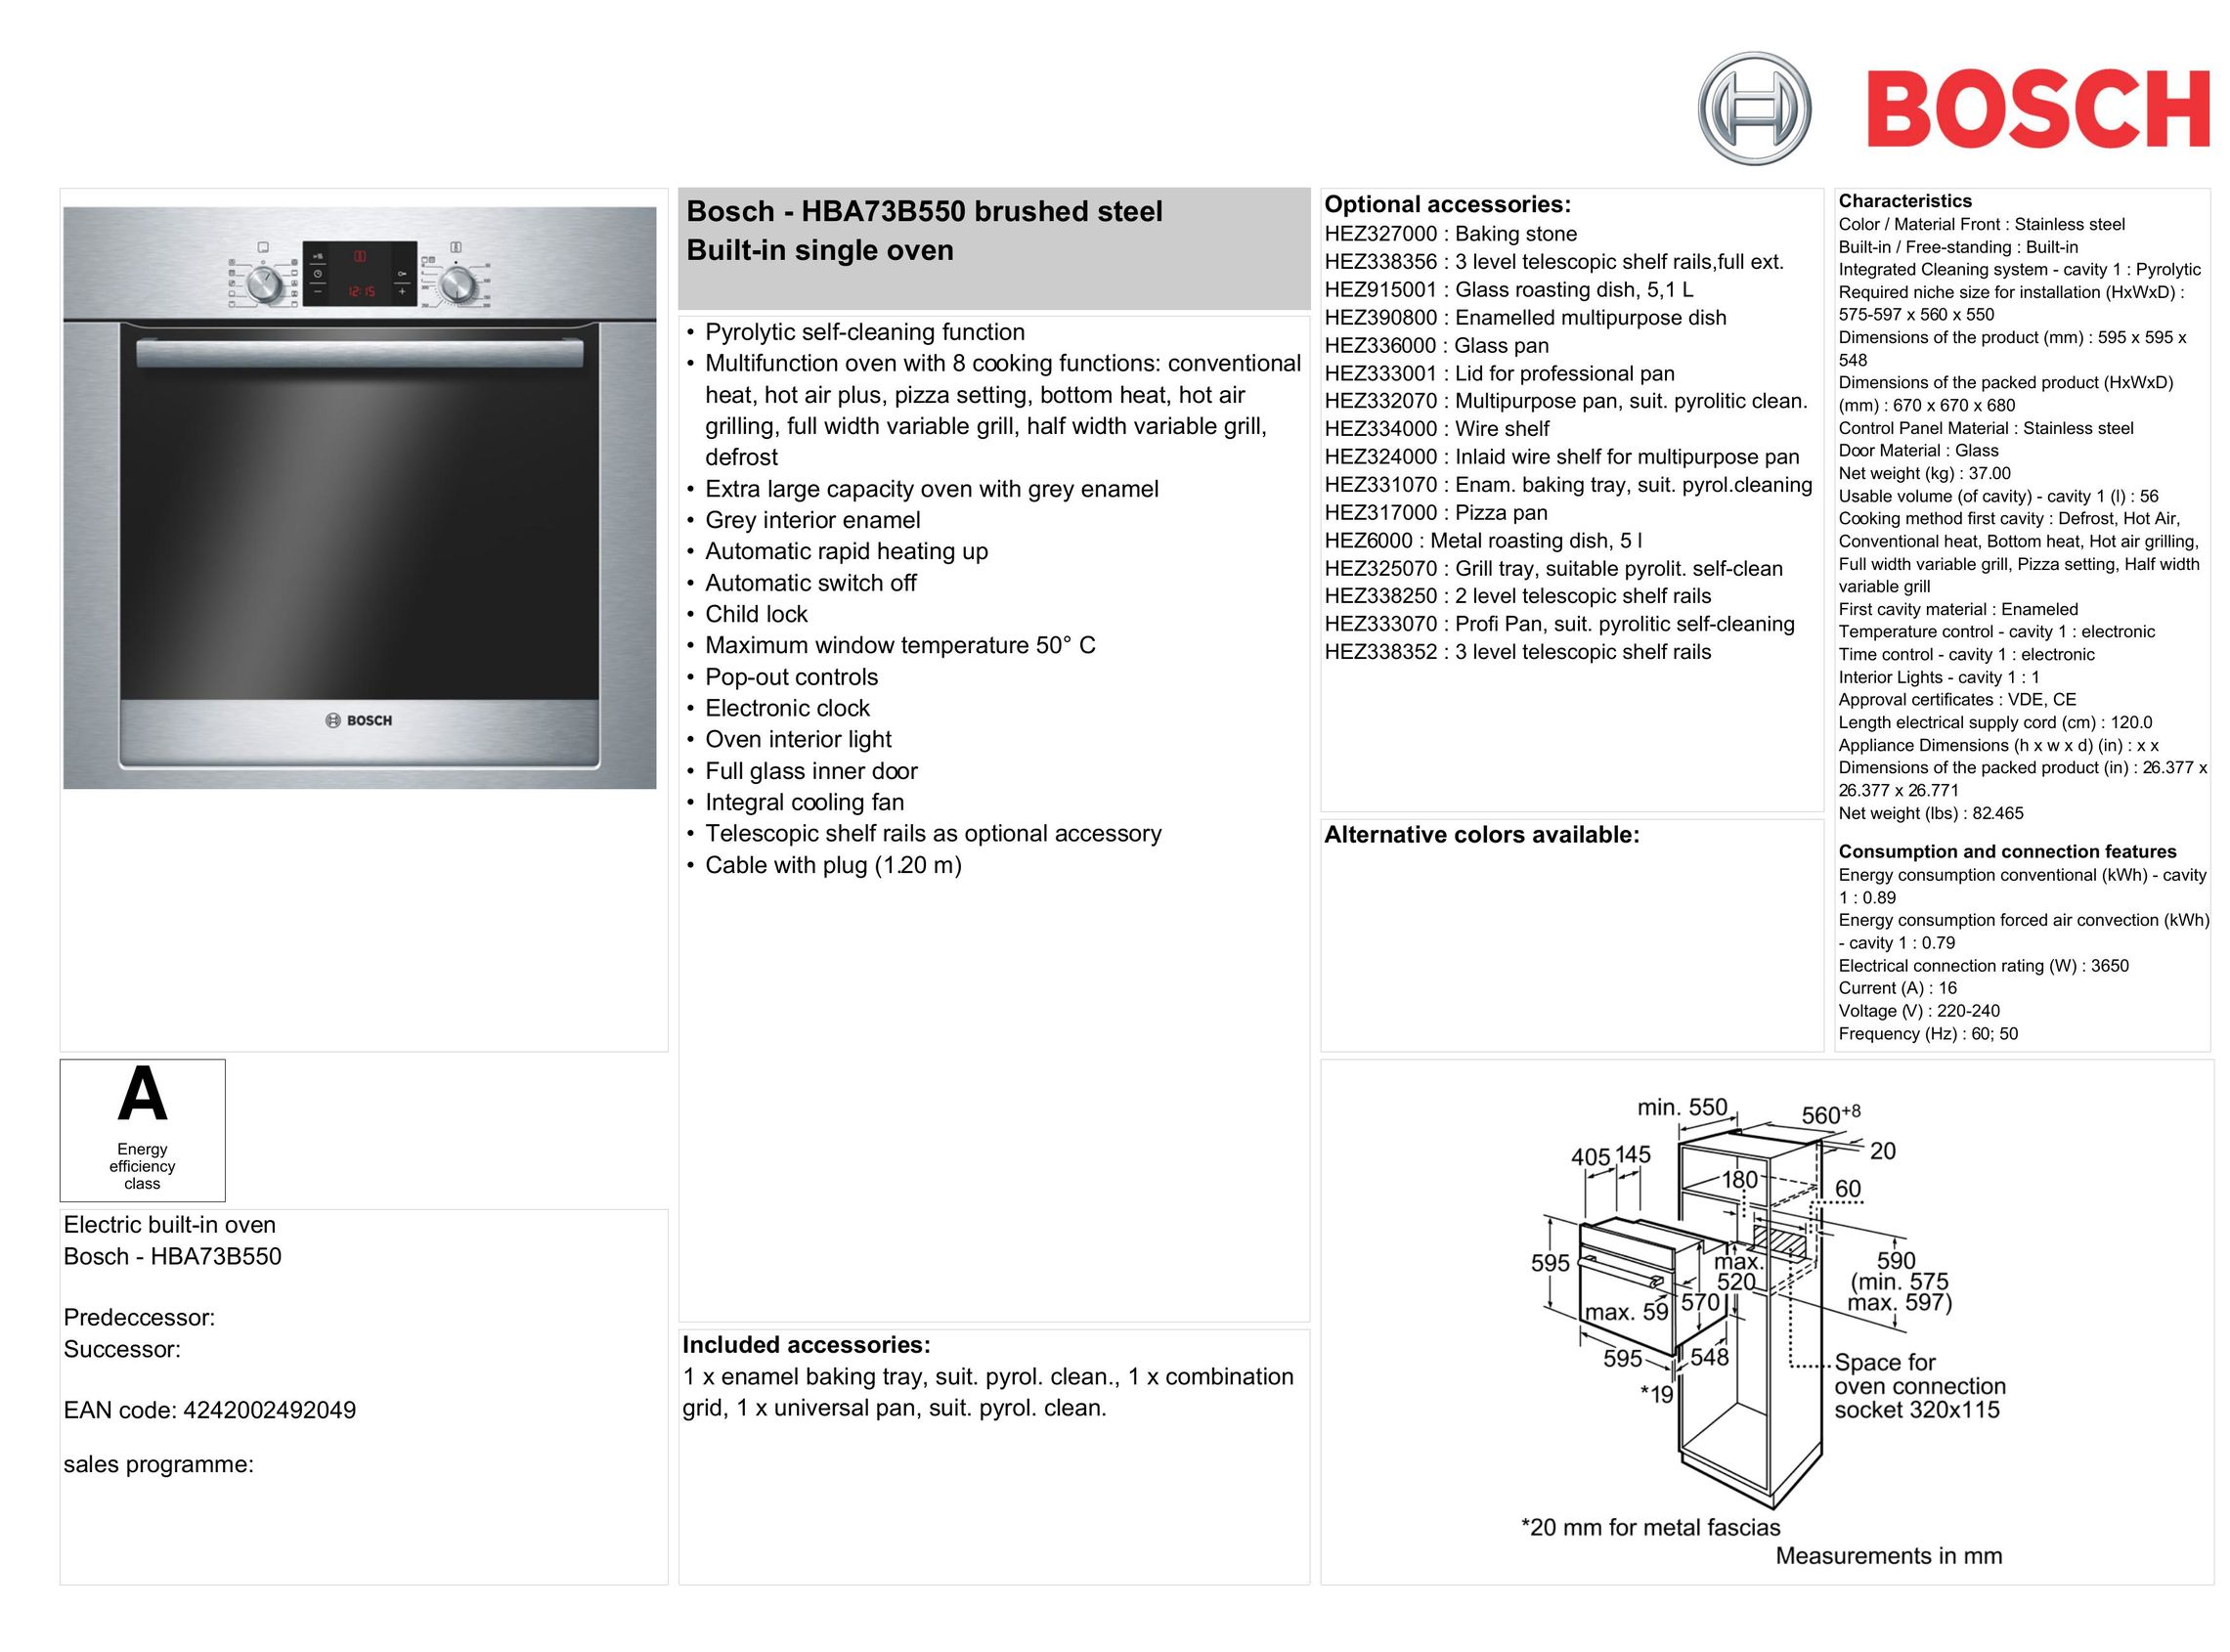 Bosch Appliances HBA738550 Oven User Manual